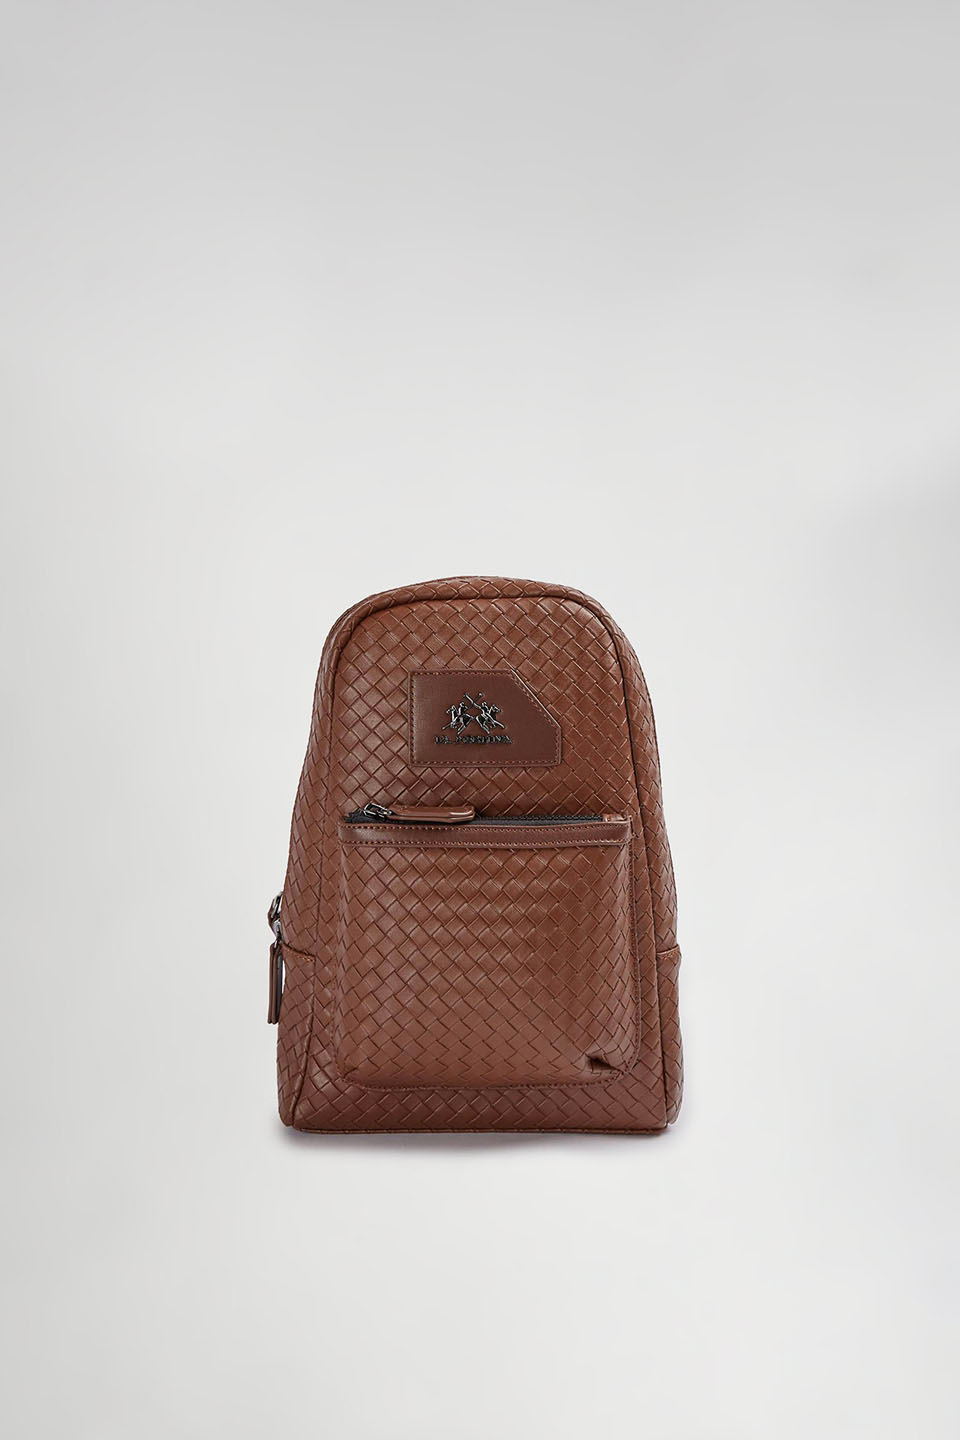 PU leather crossbody bag - La Martina - Official Online Shop